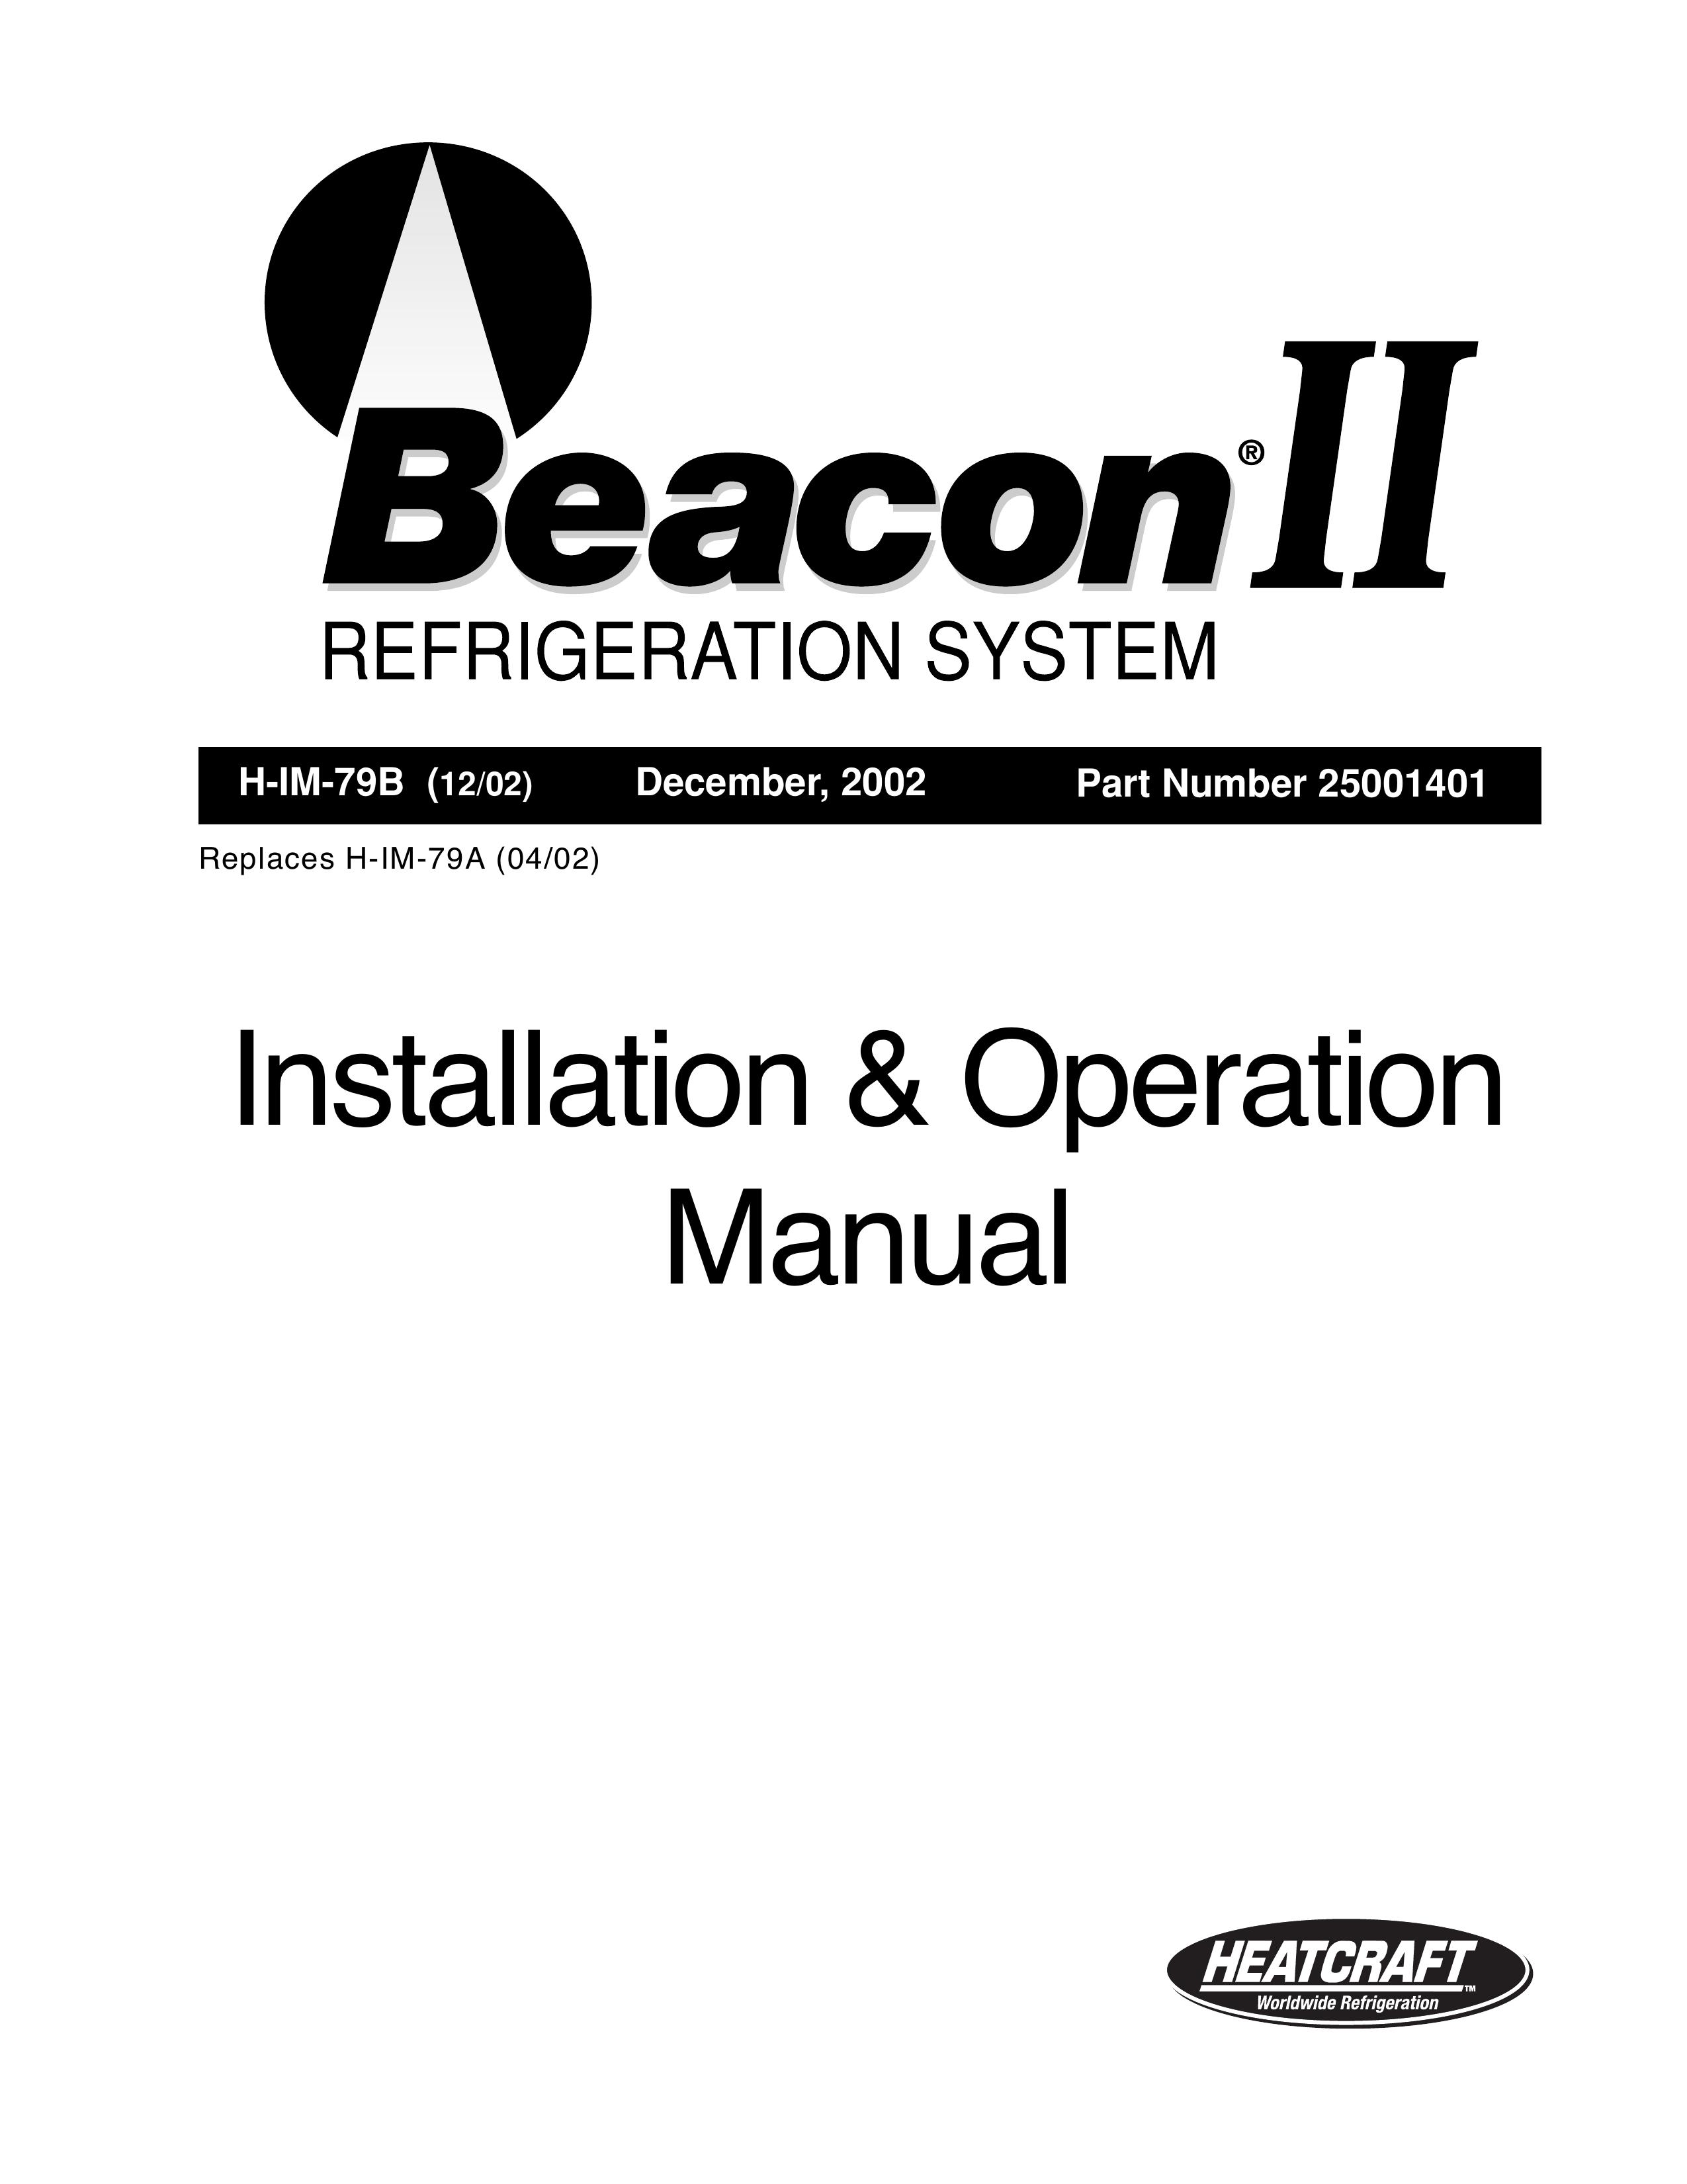 Heatcraft Refrigeration Products H-IM-79B Refrigerator User Manual